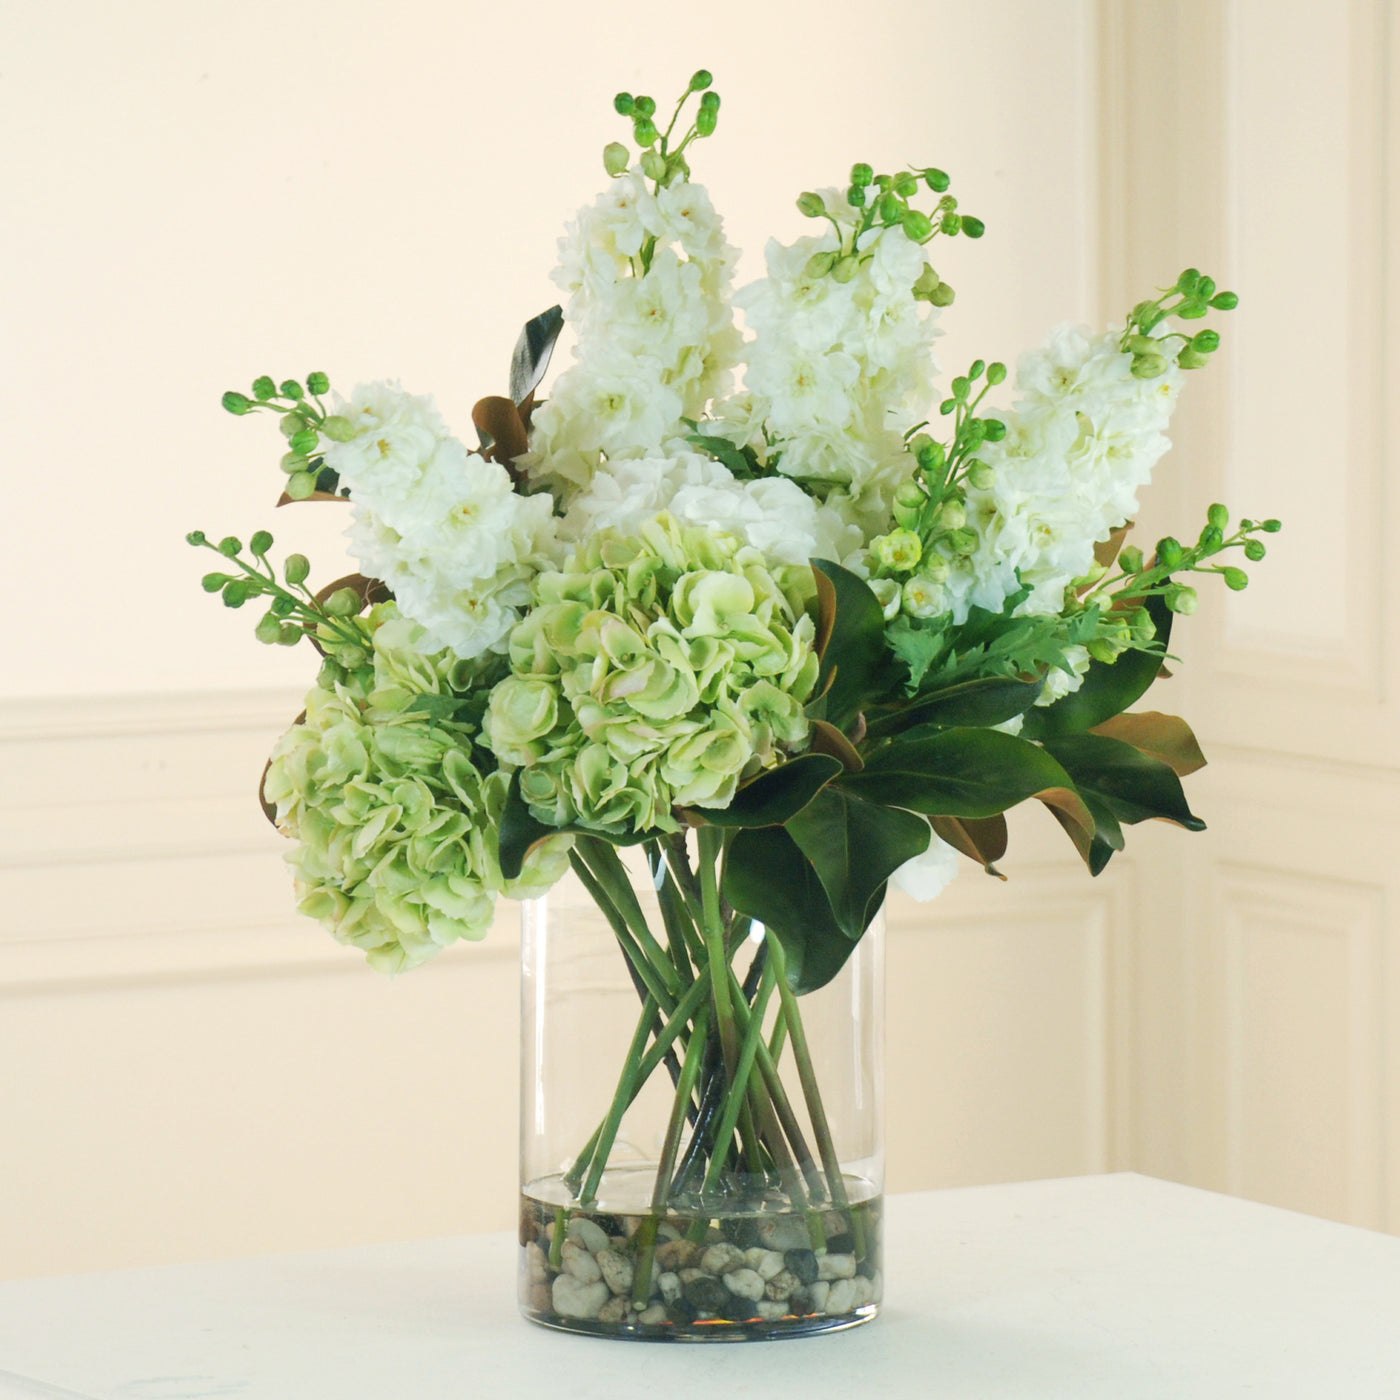 HYDRANGEA AND DELPHINIUM IN GLASS (DP713-WHGR) - Winward Home faux floral arrangements